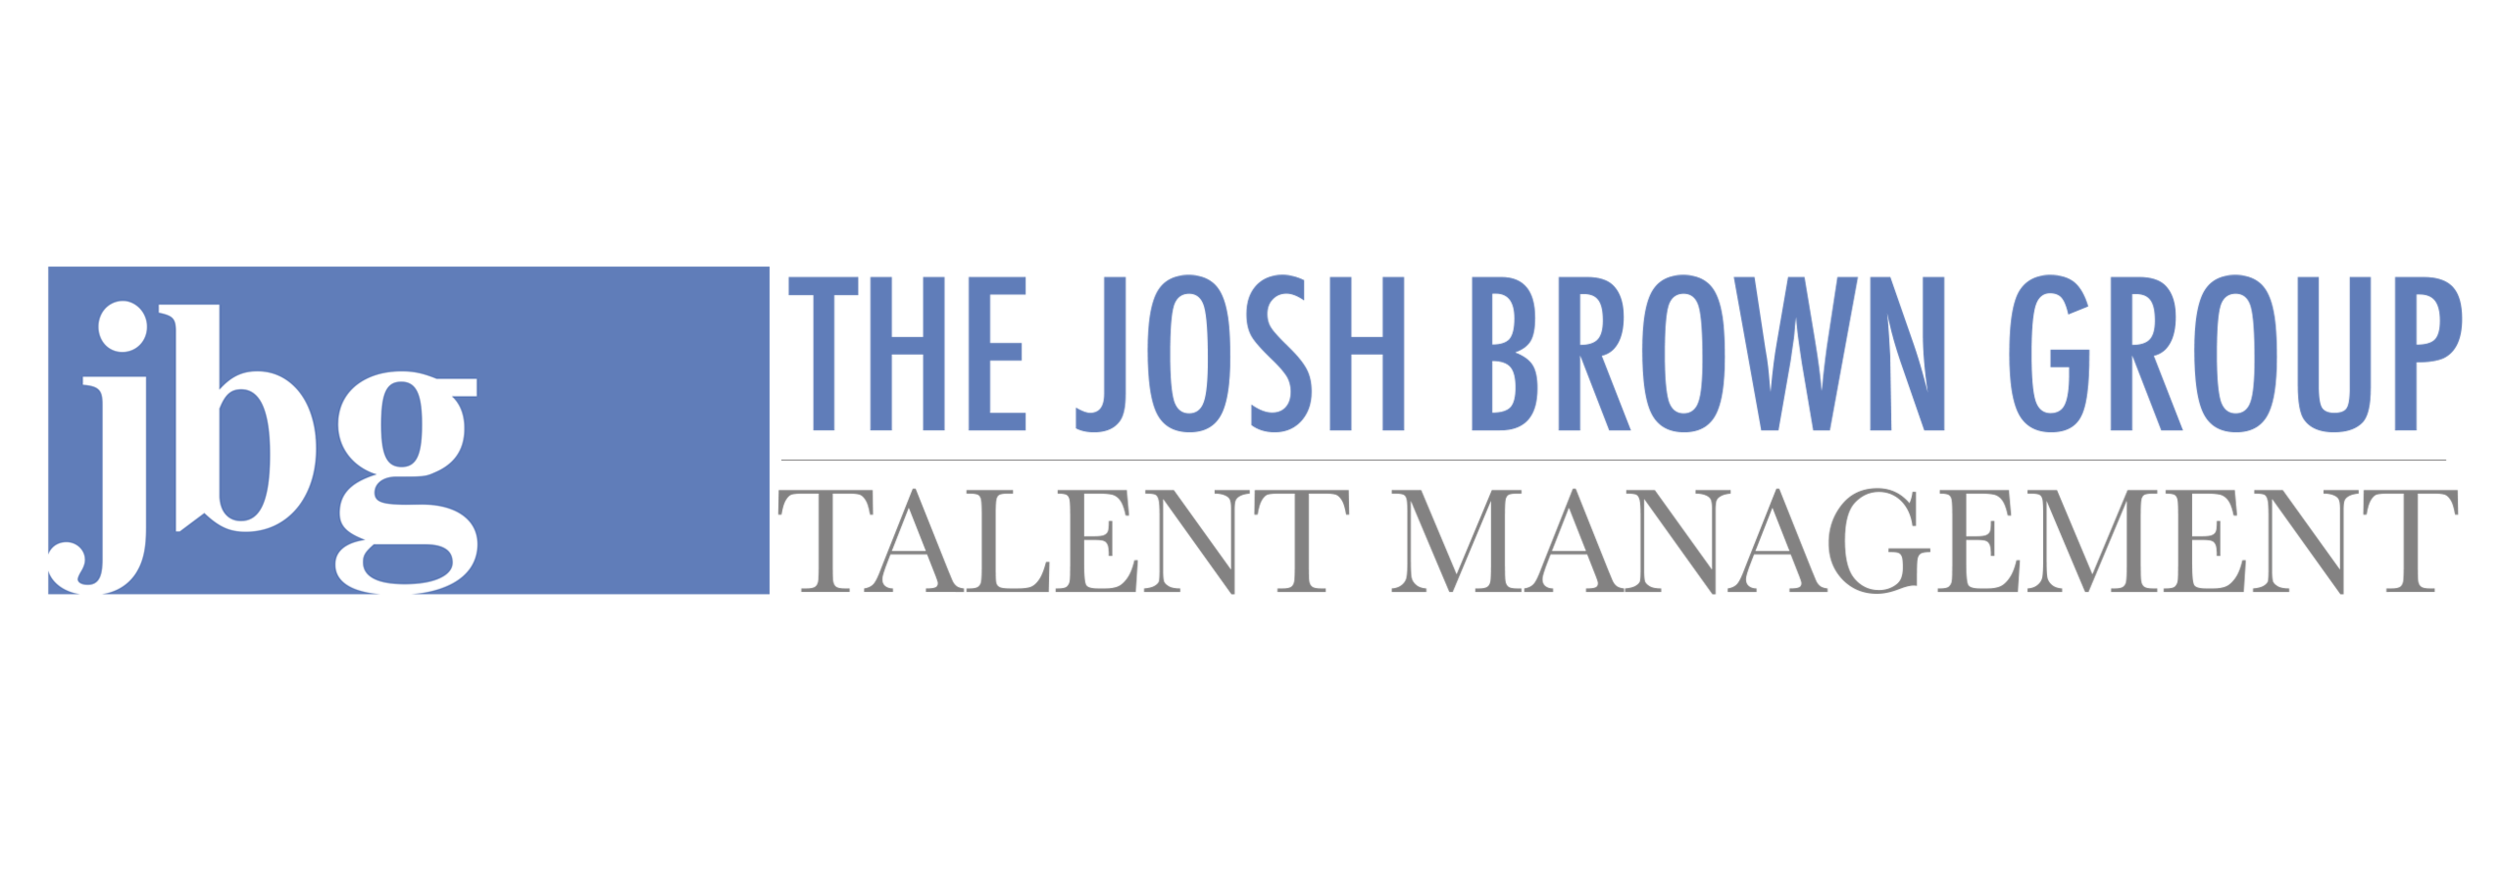 The Josh Brown Group